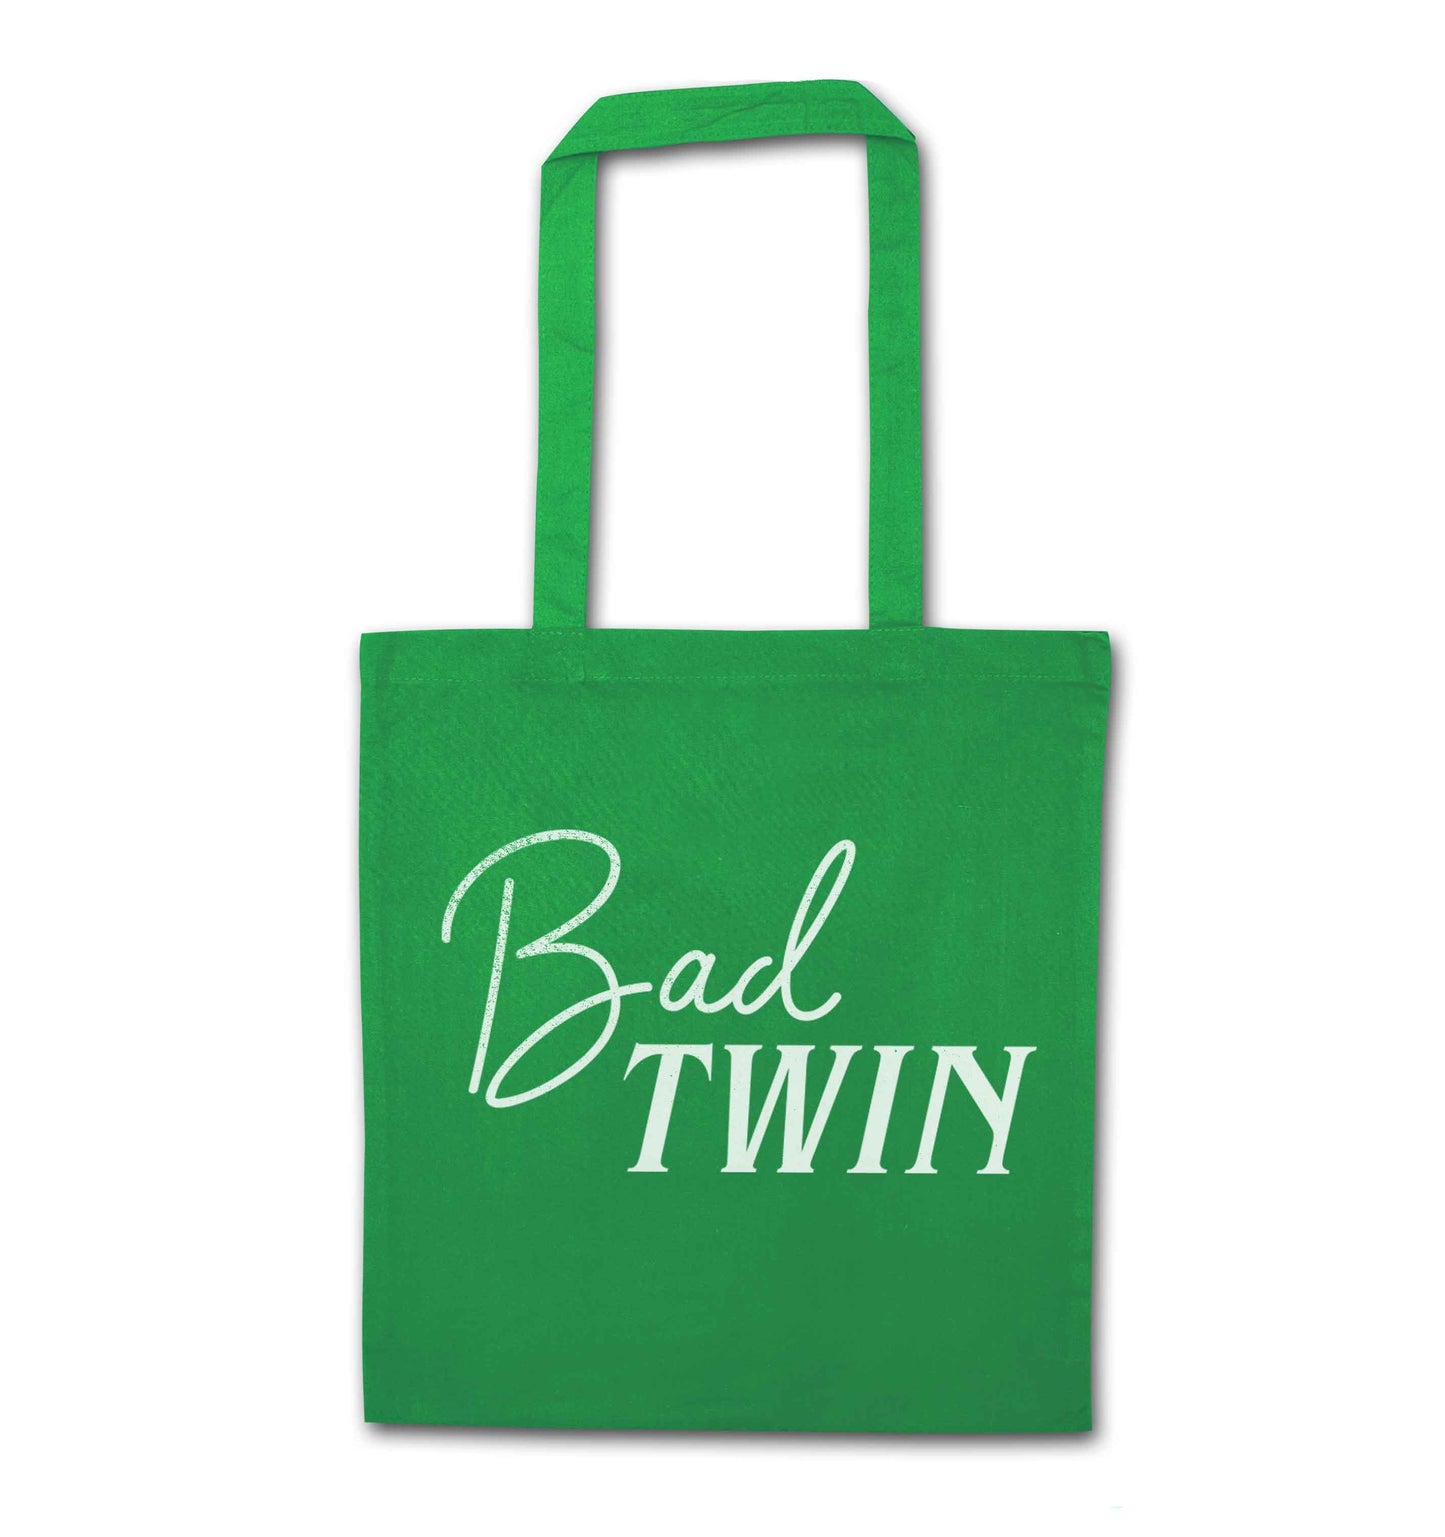 Bad twin green tote bag